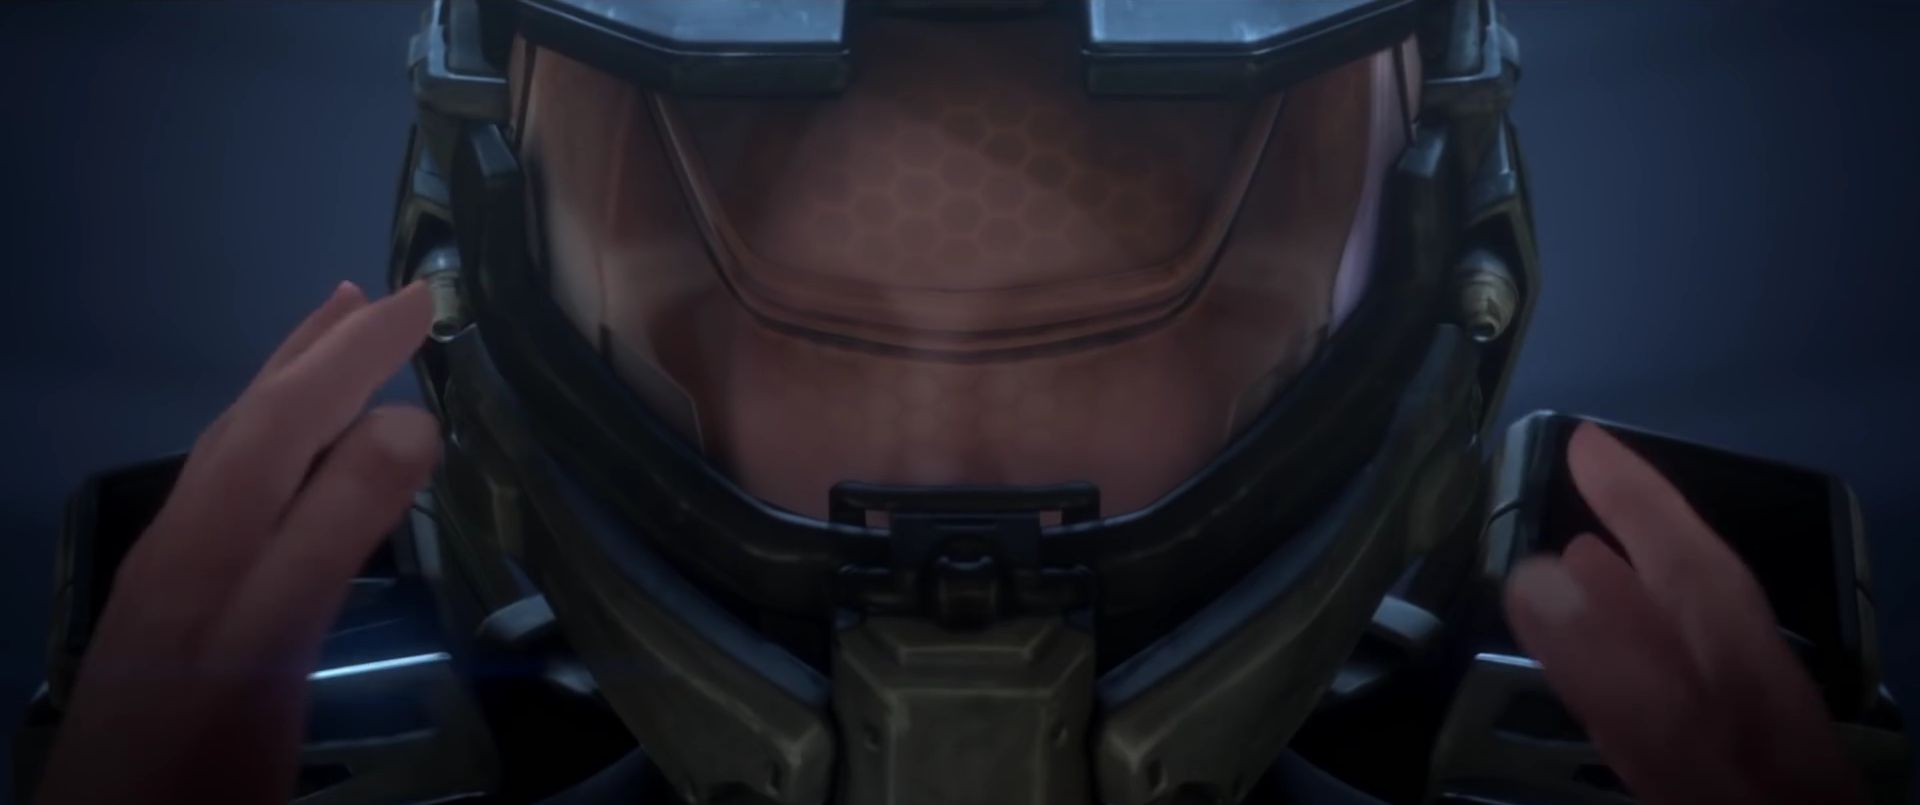 Trailer de 'Halo: The Fall of Reach', espectacular nueva serie de la saga